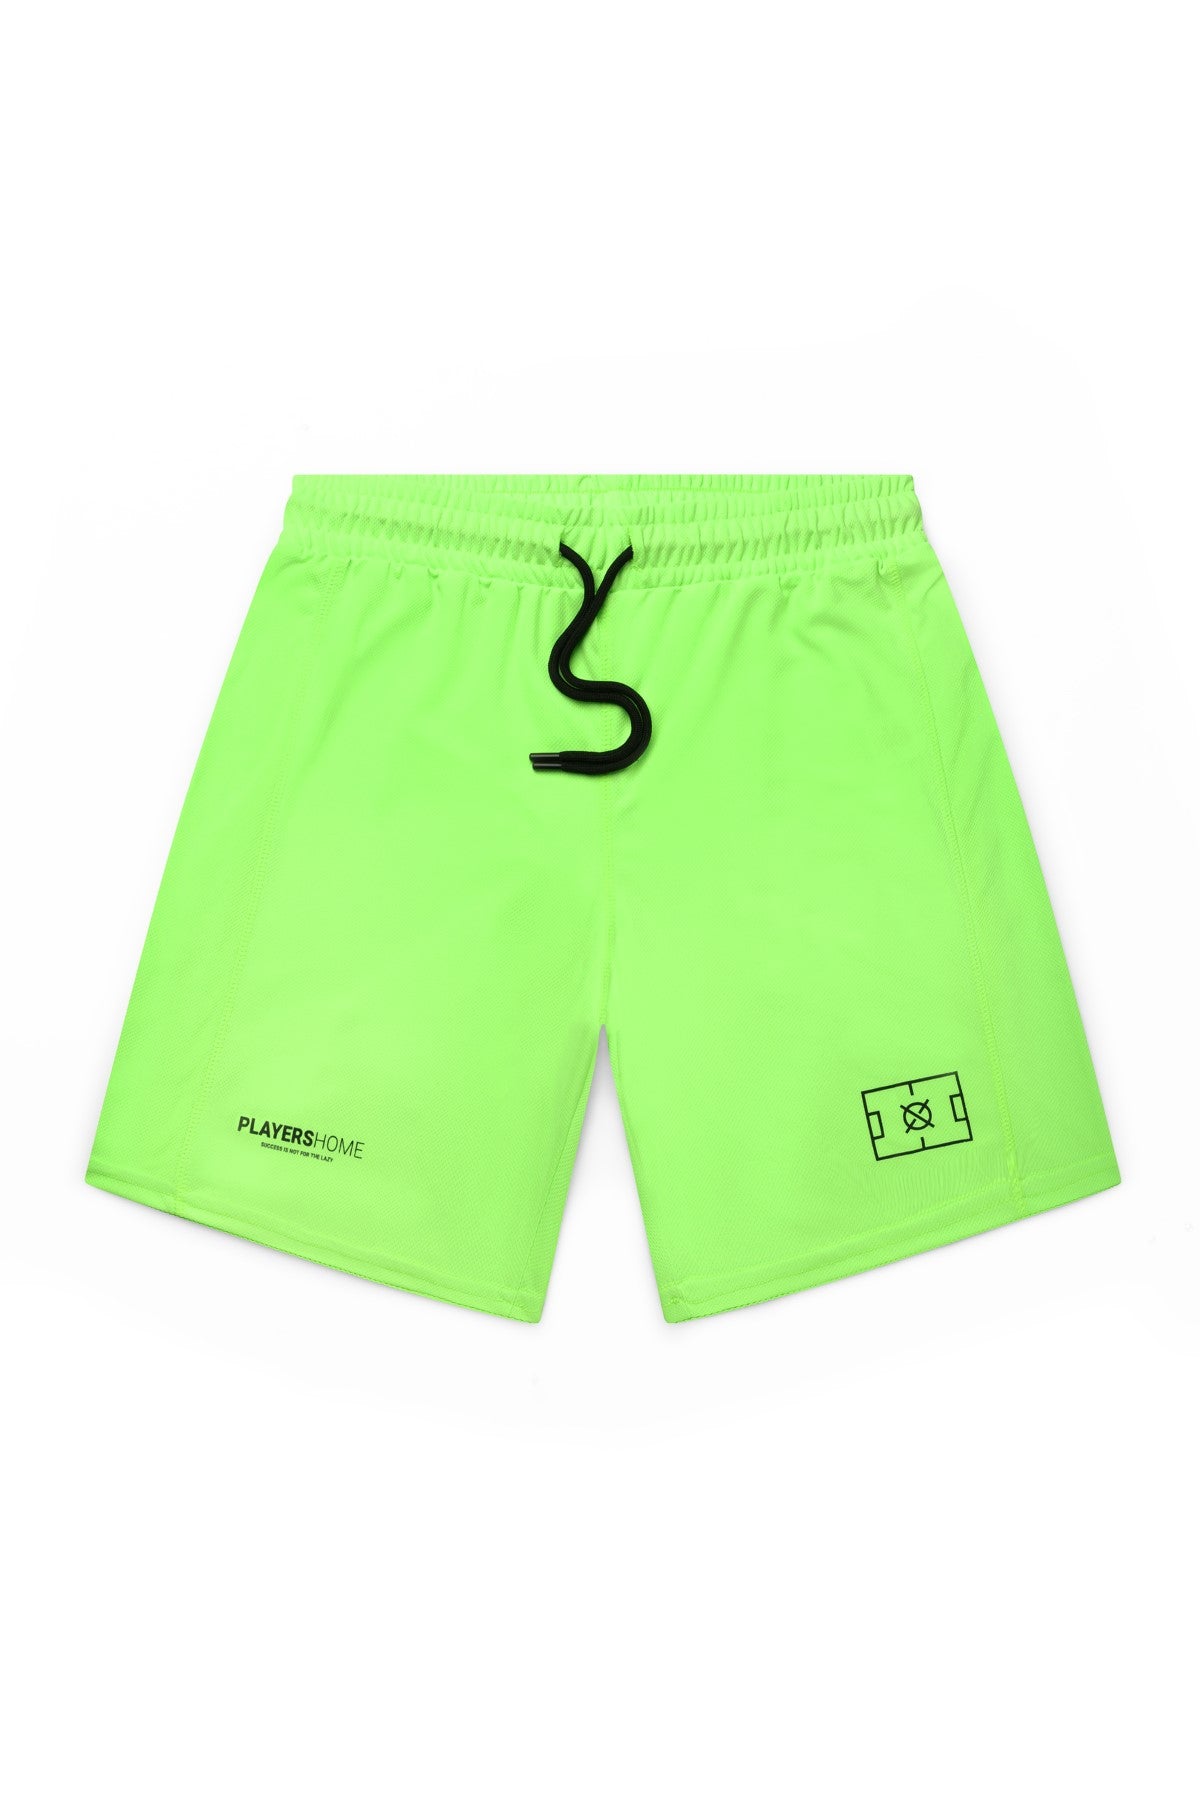 PLAYERSHOME x TRUST Shorts - Neon Green